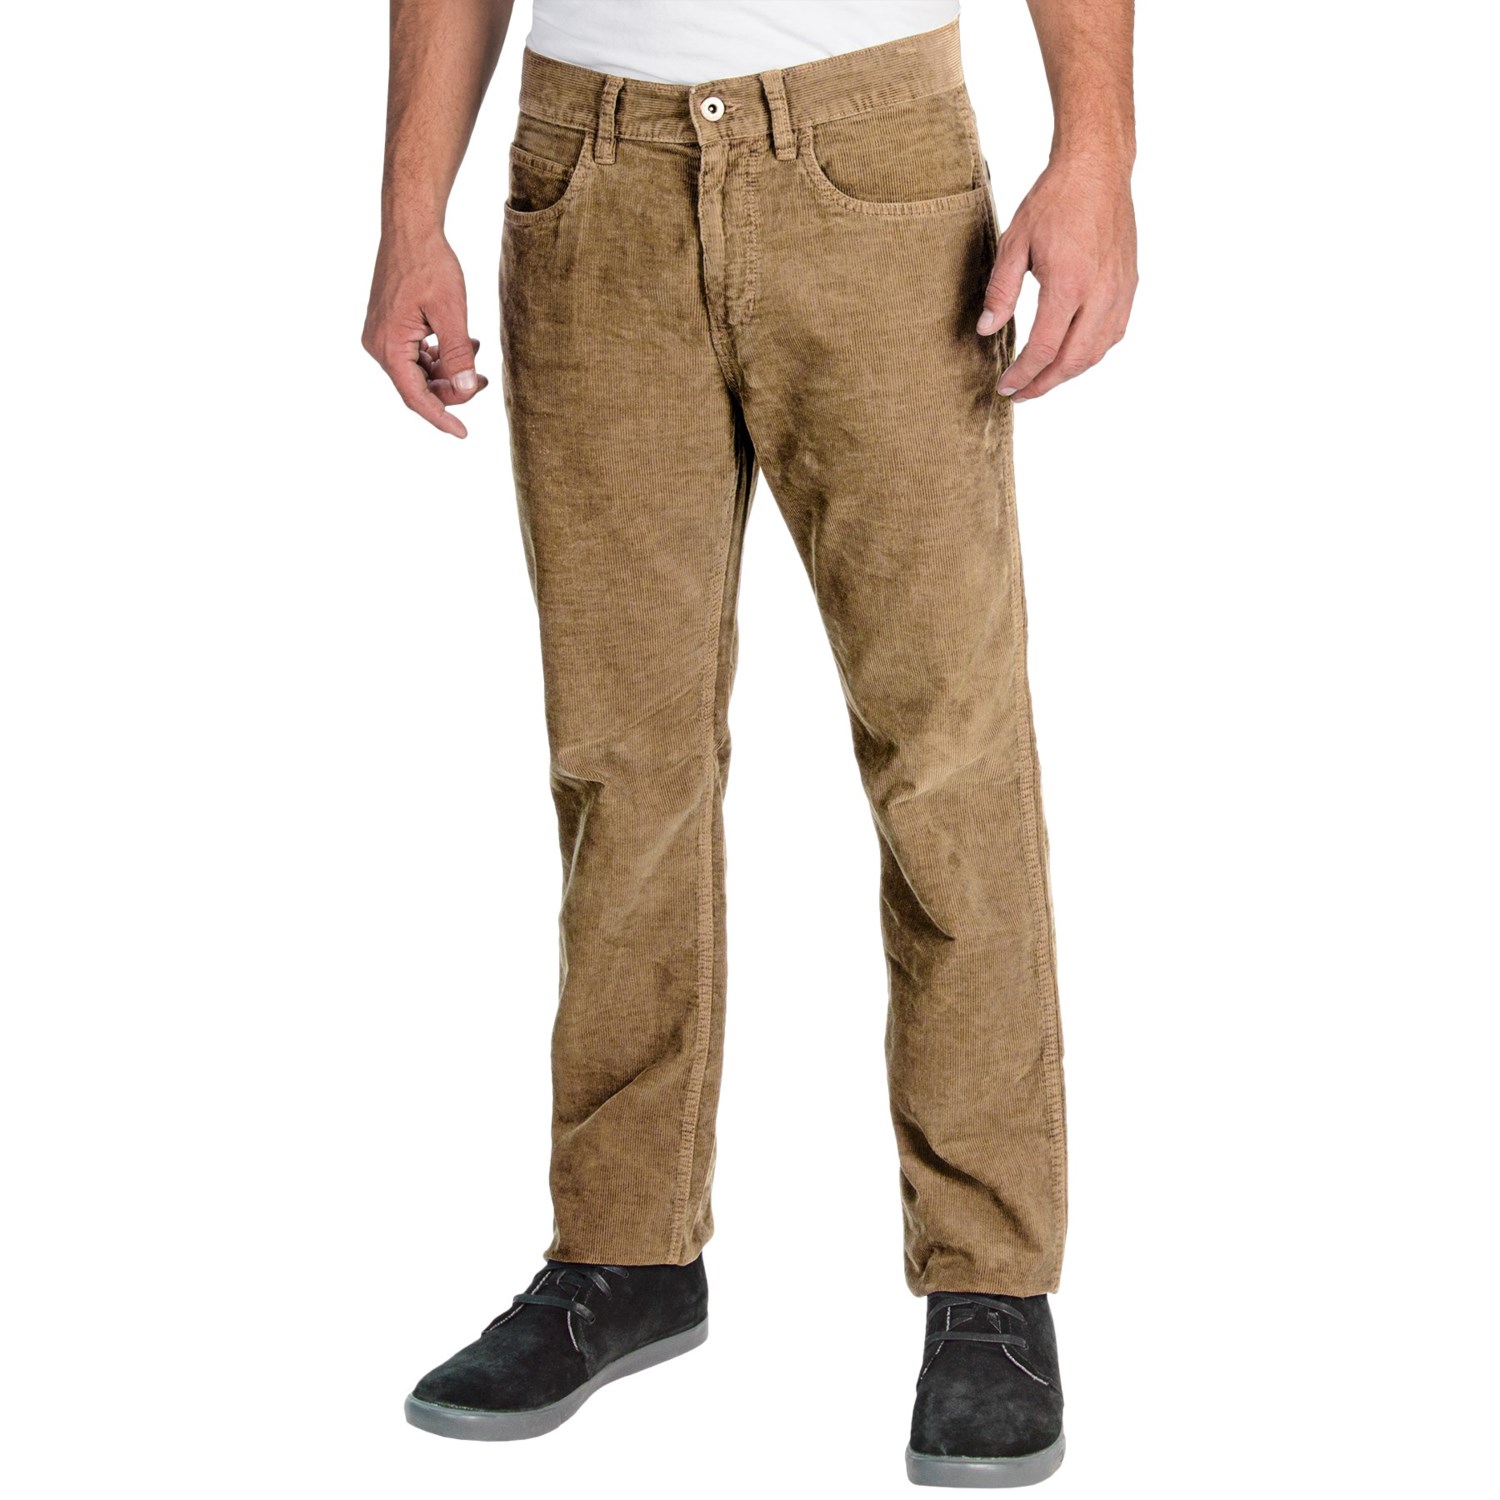 Five-Pocket Corduroy Pants (For Men) - Save 60%